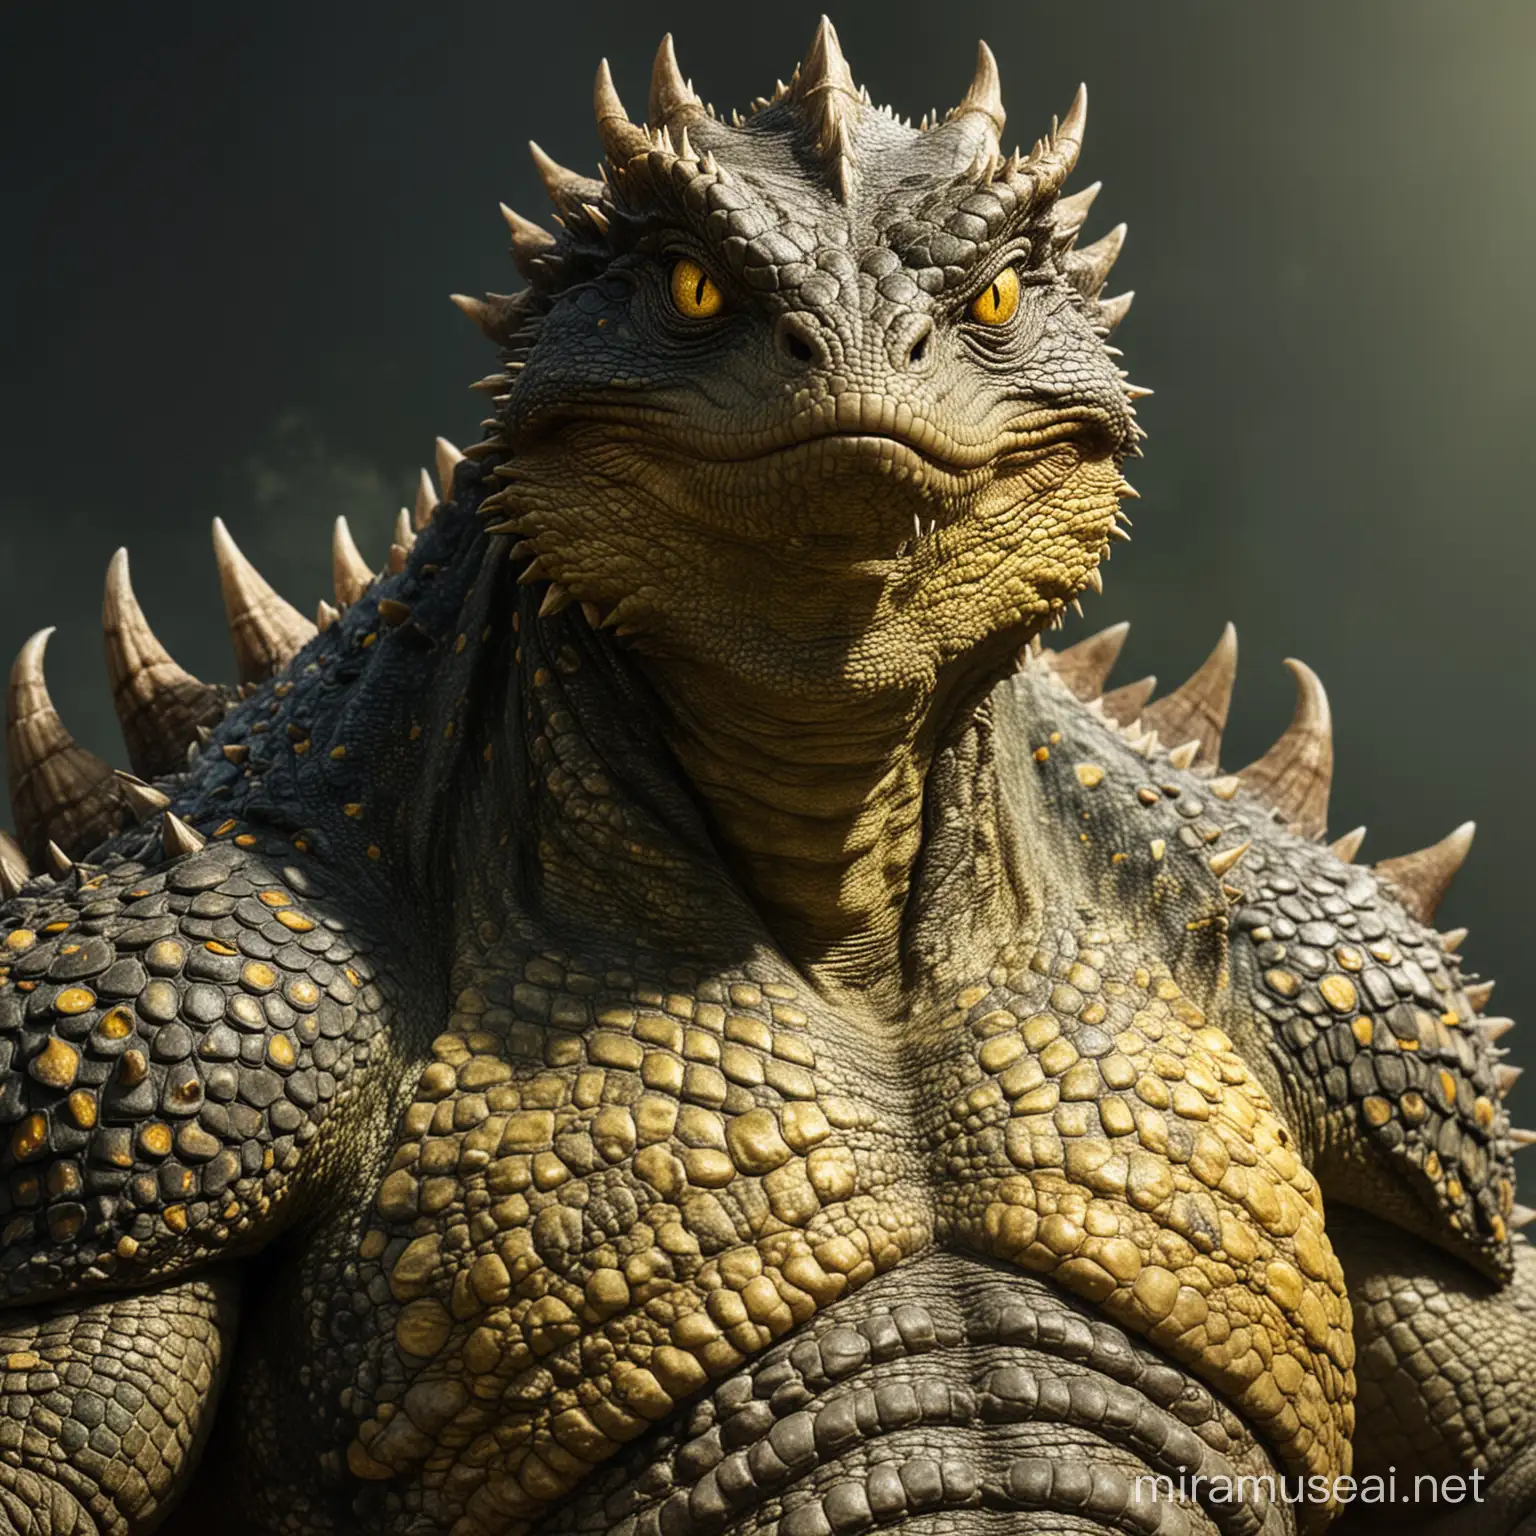 lizardman king, big belly, enormous, girgantuan, giant, yellow shinning eyes